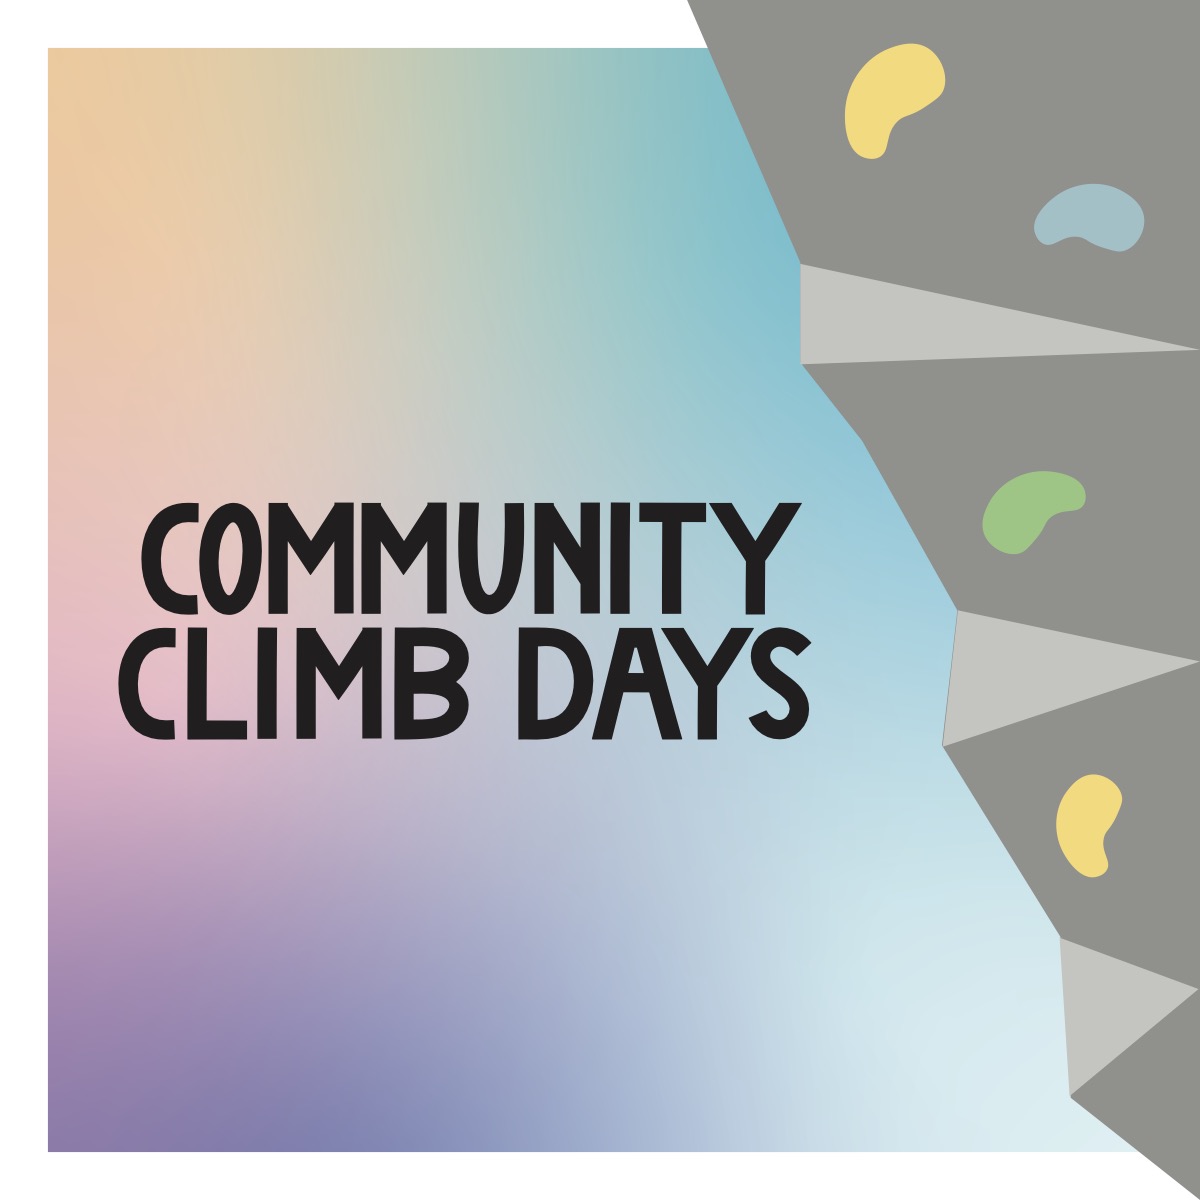 Community climb days websquare